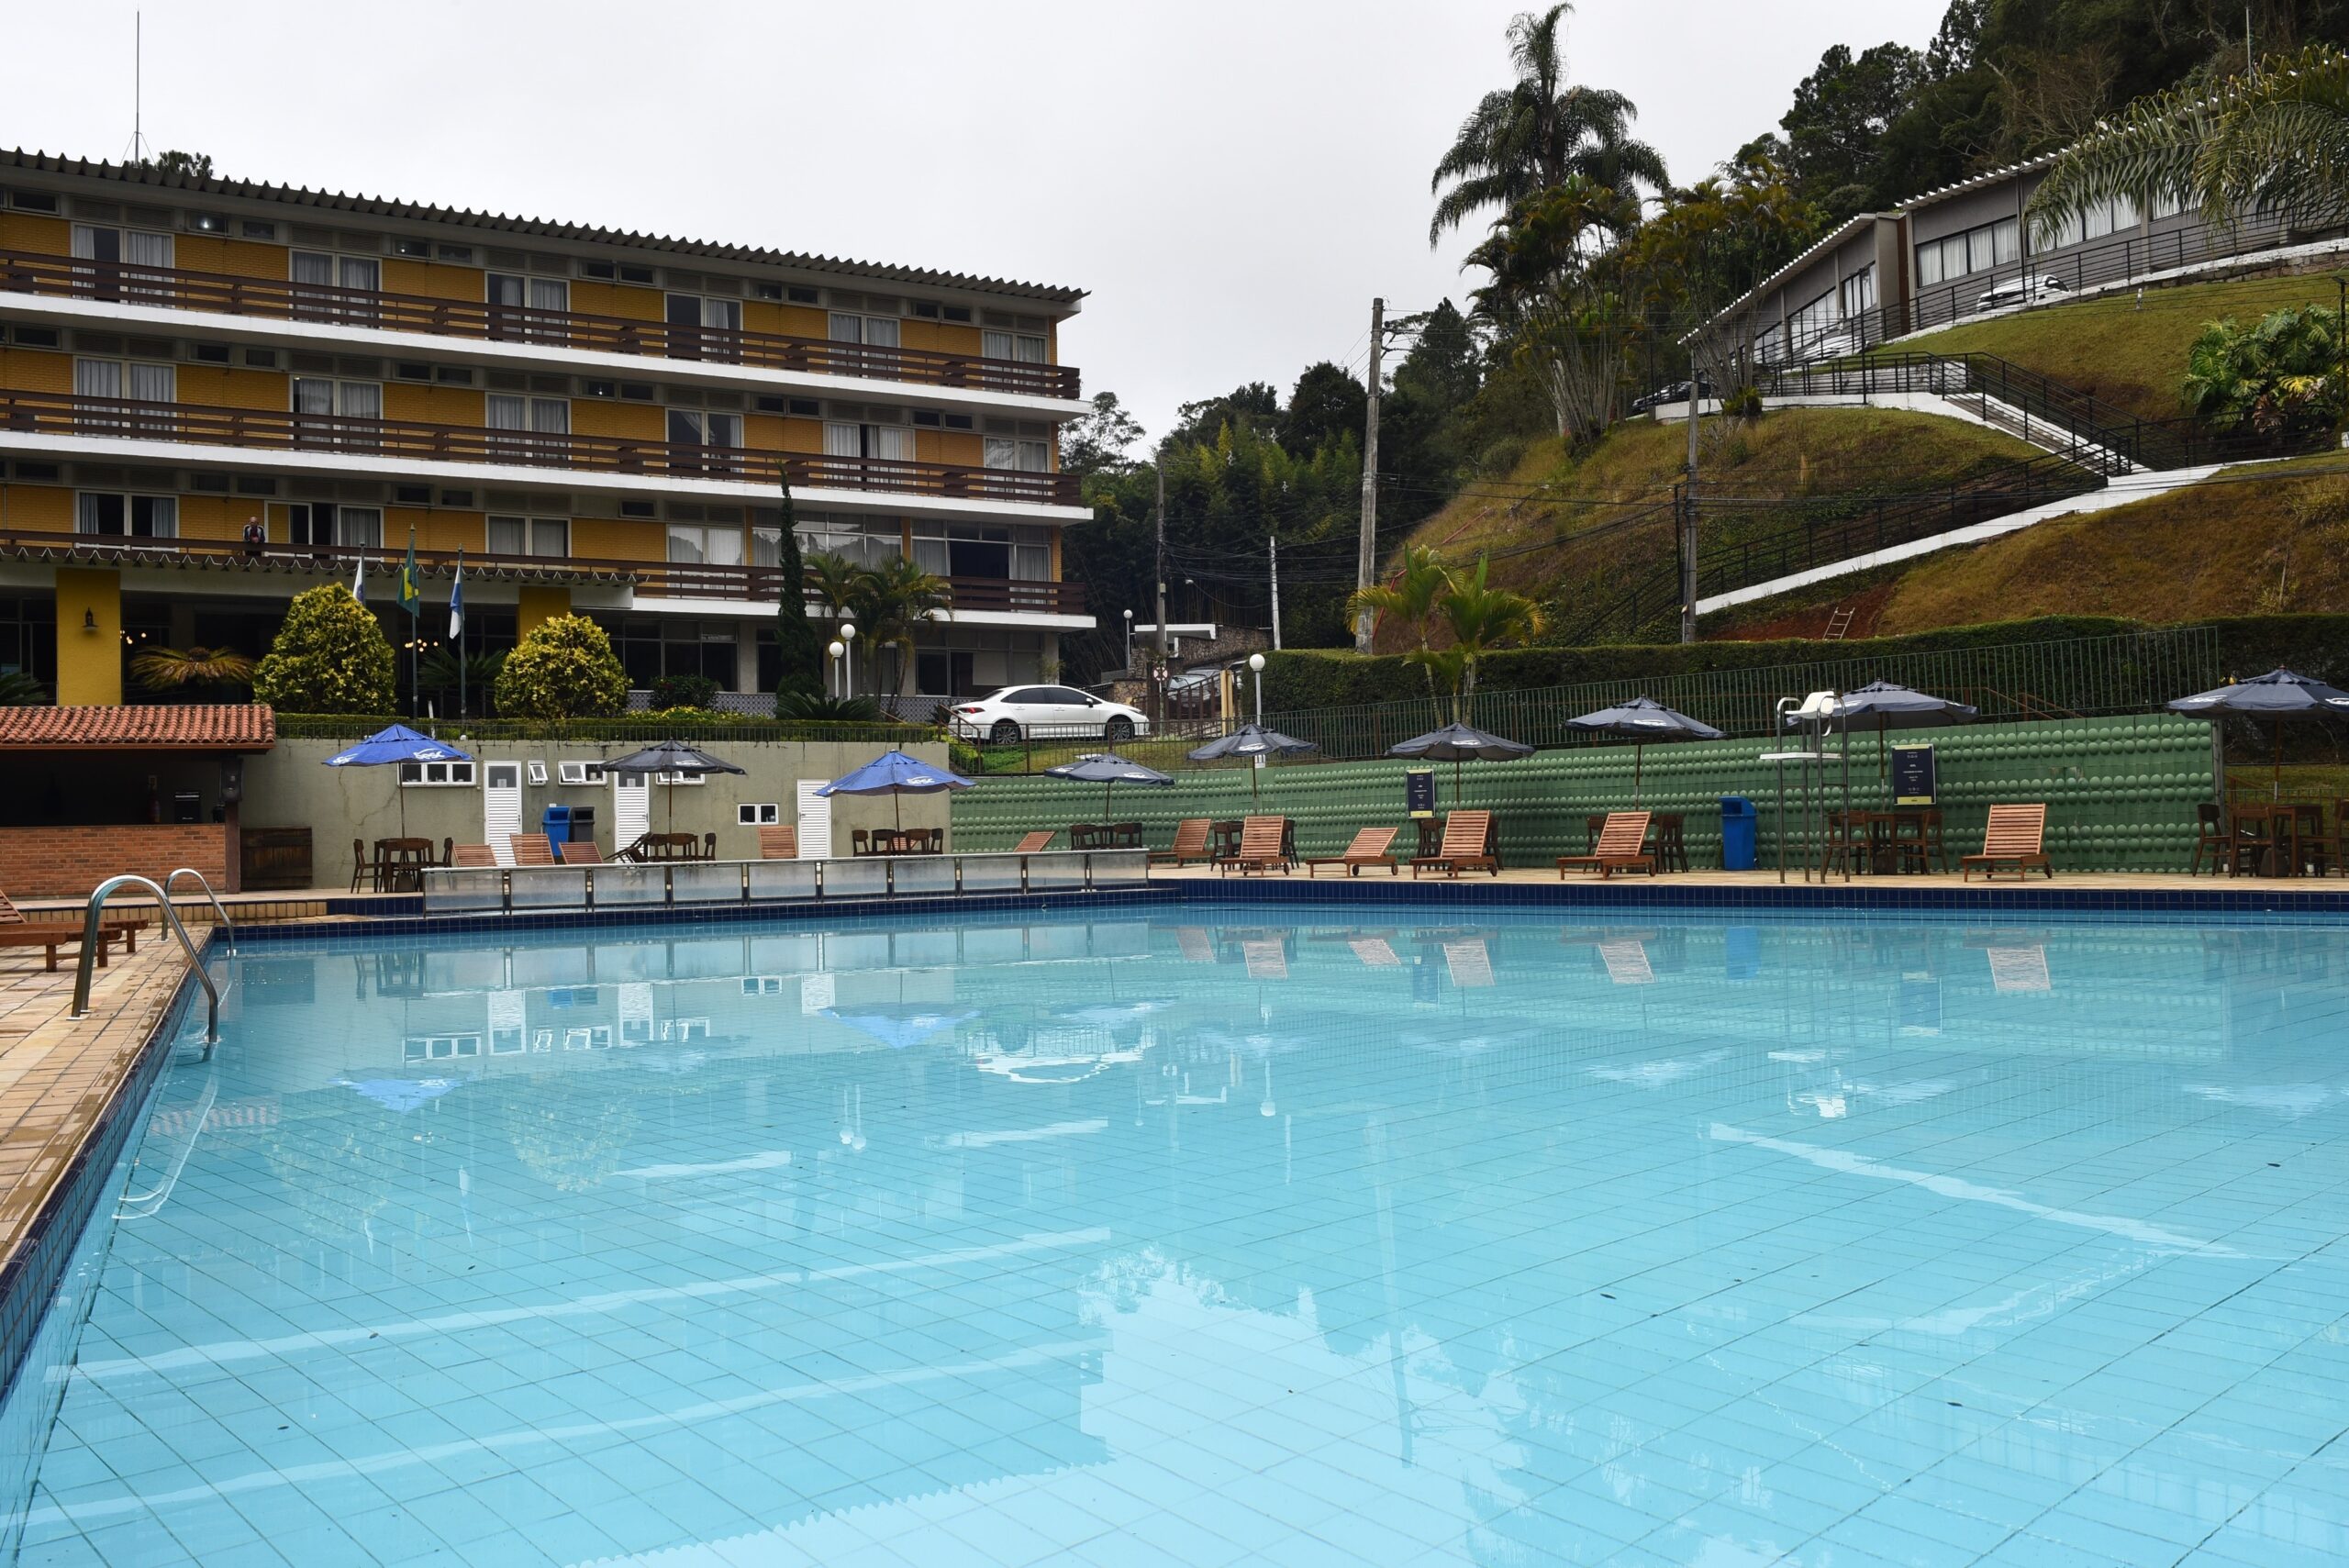 Hotel Sesc Cabo Frio - Portal Sesc RJ